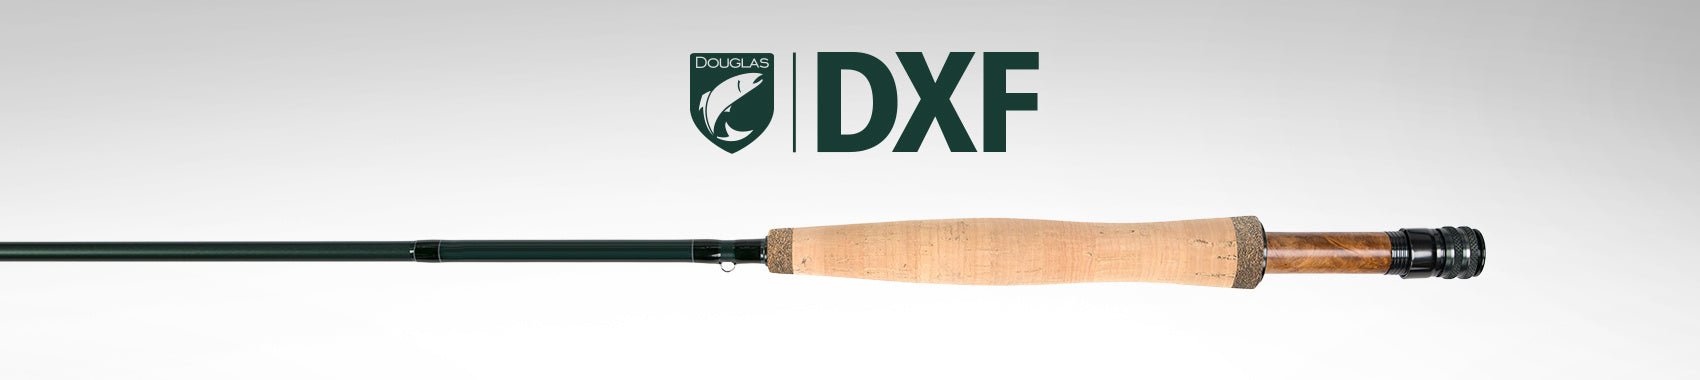 Douglas DXF Fly Rod - 9' 4wt 4pc